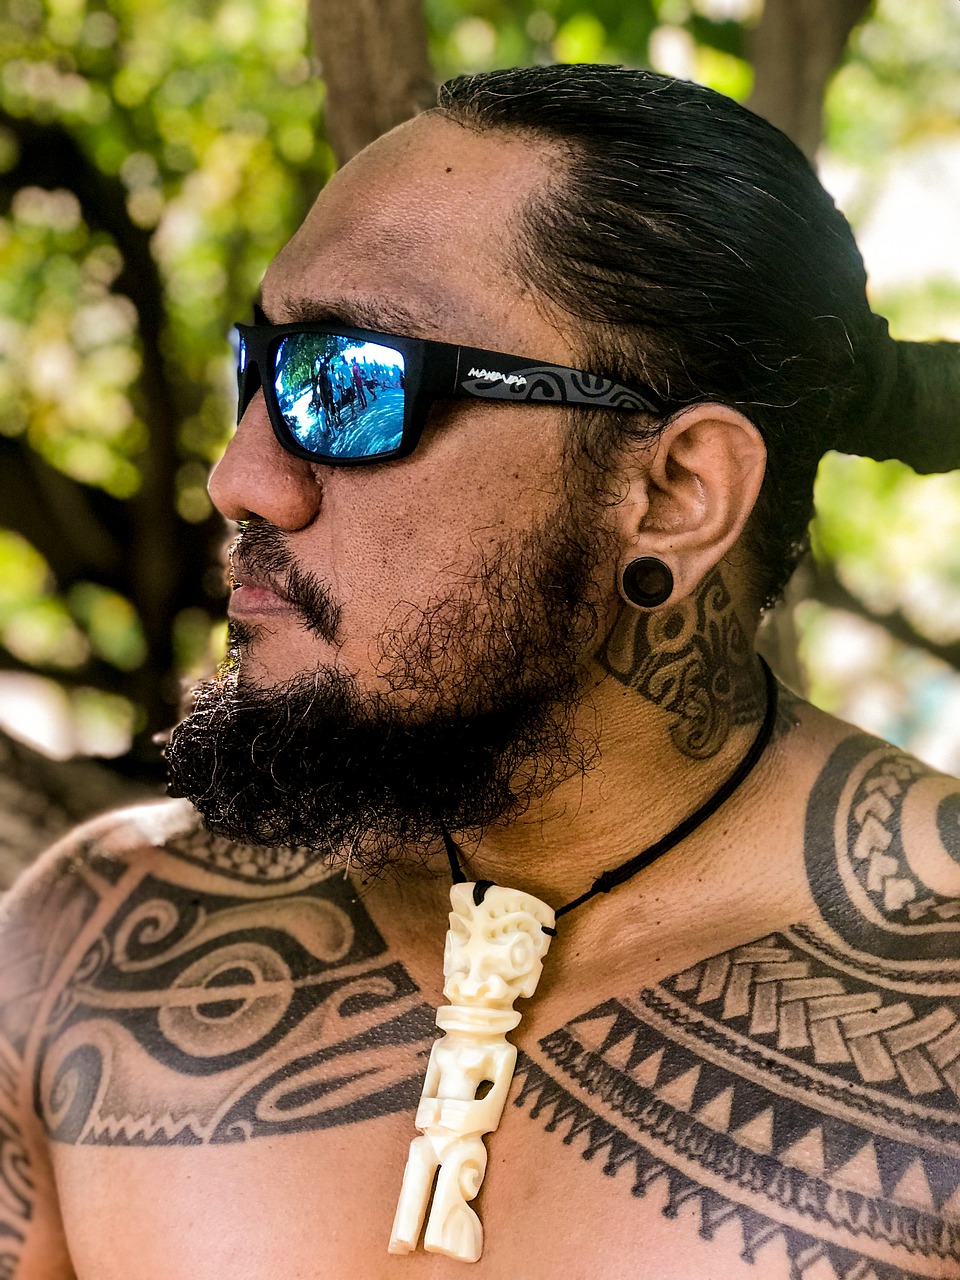 Jessa Bigelow on Twitter Polynesian style arm band  tattoo tattoos  bergenfield bergenfieldnj ladytattooer tribal httptcoJFnCyUdU0D   Twitter